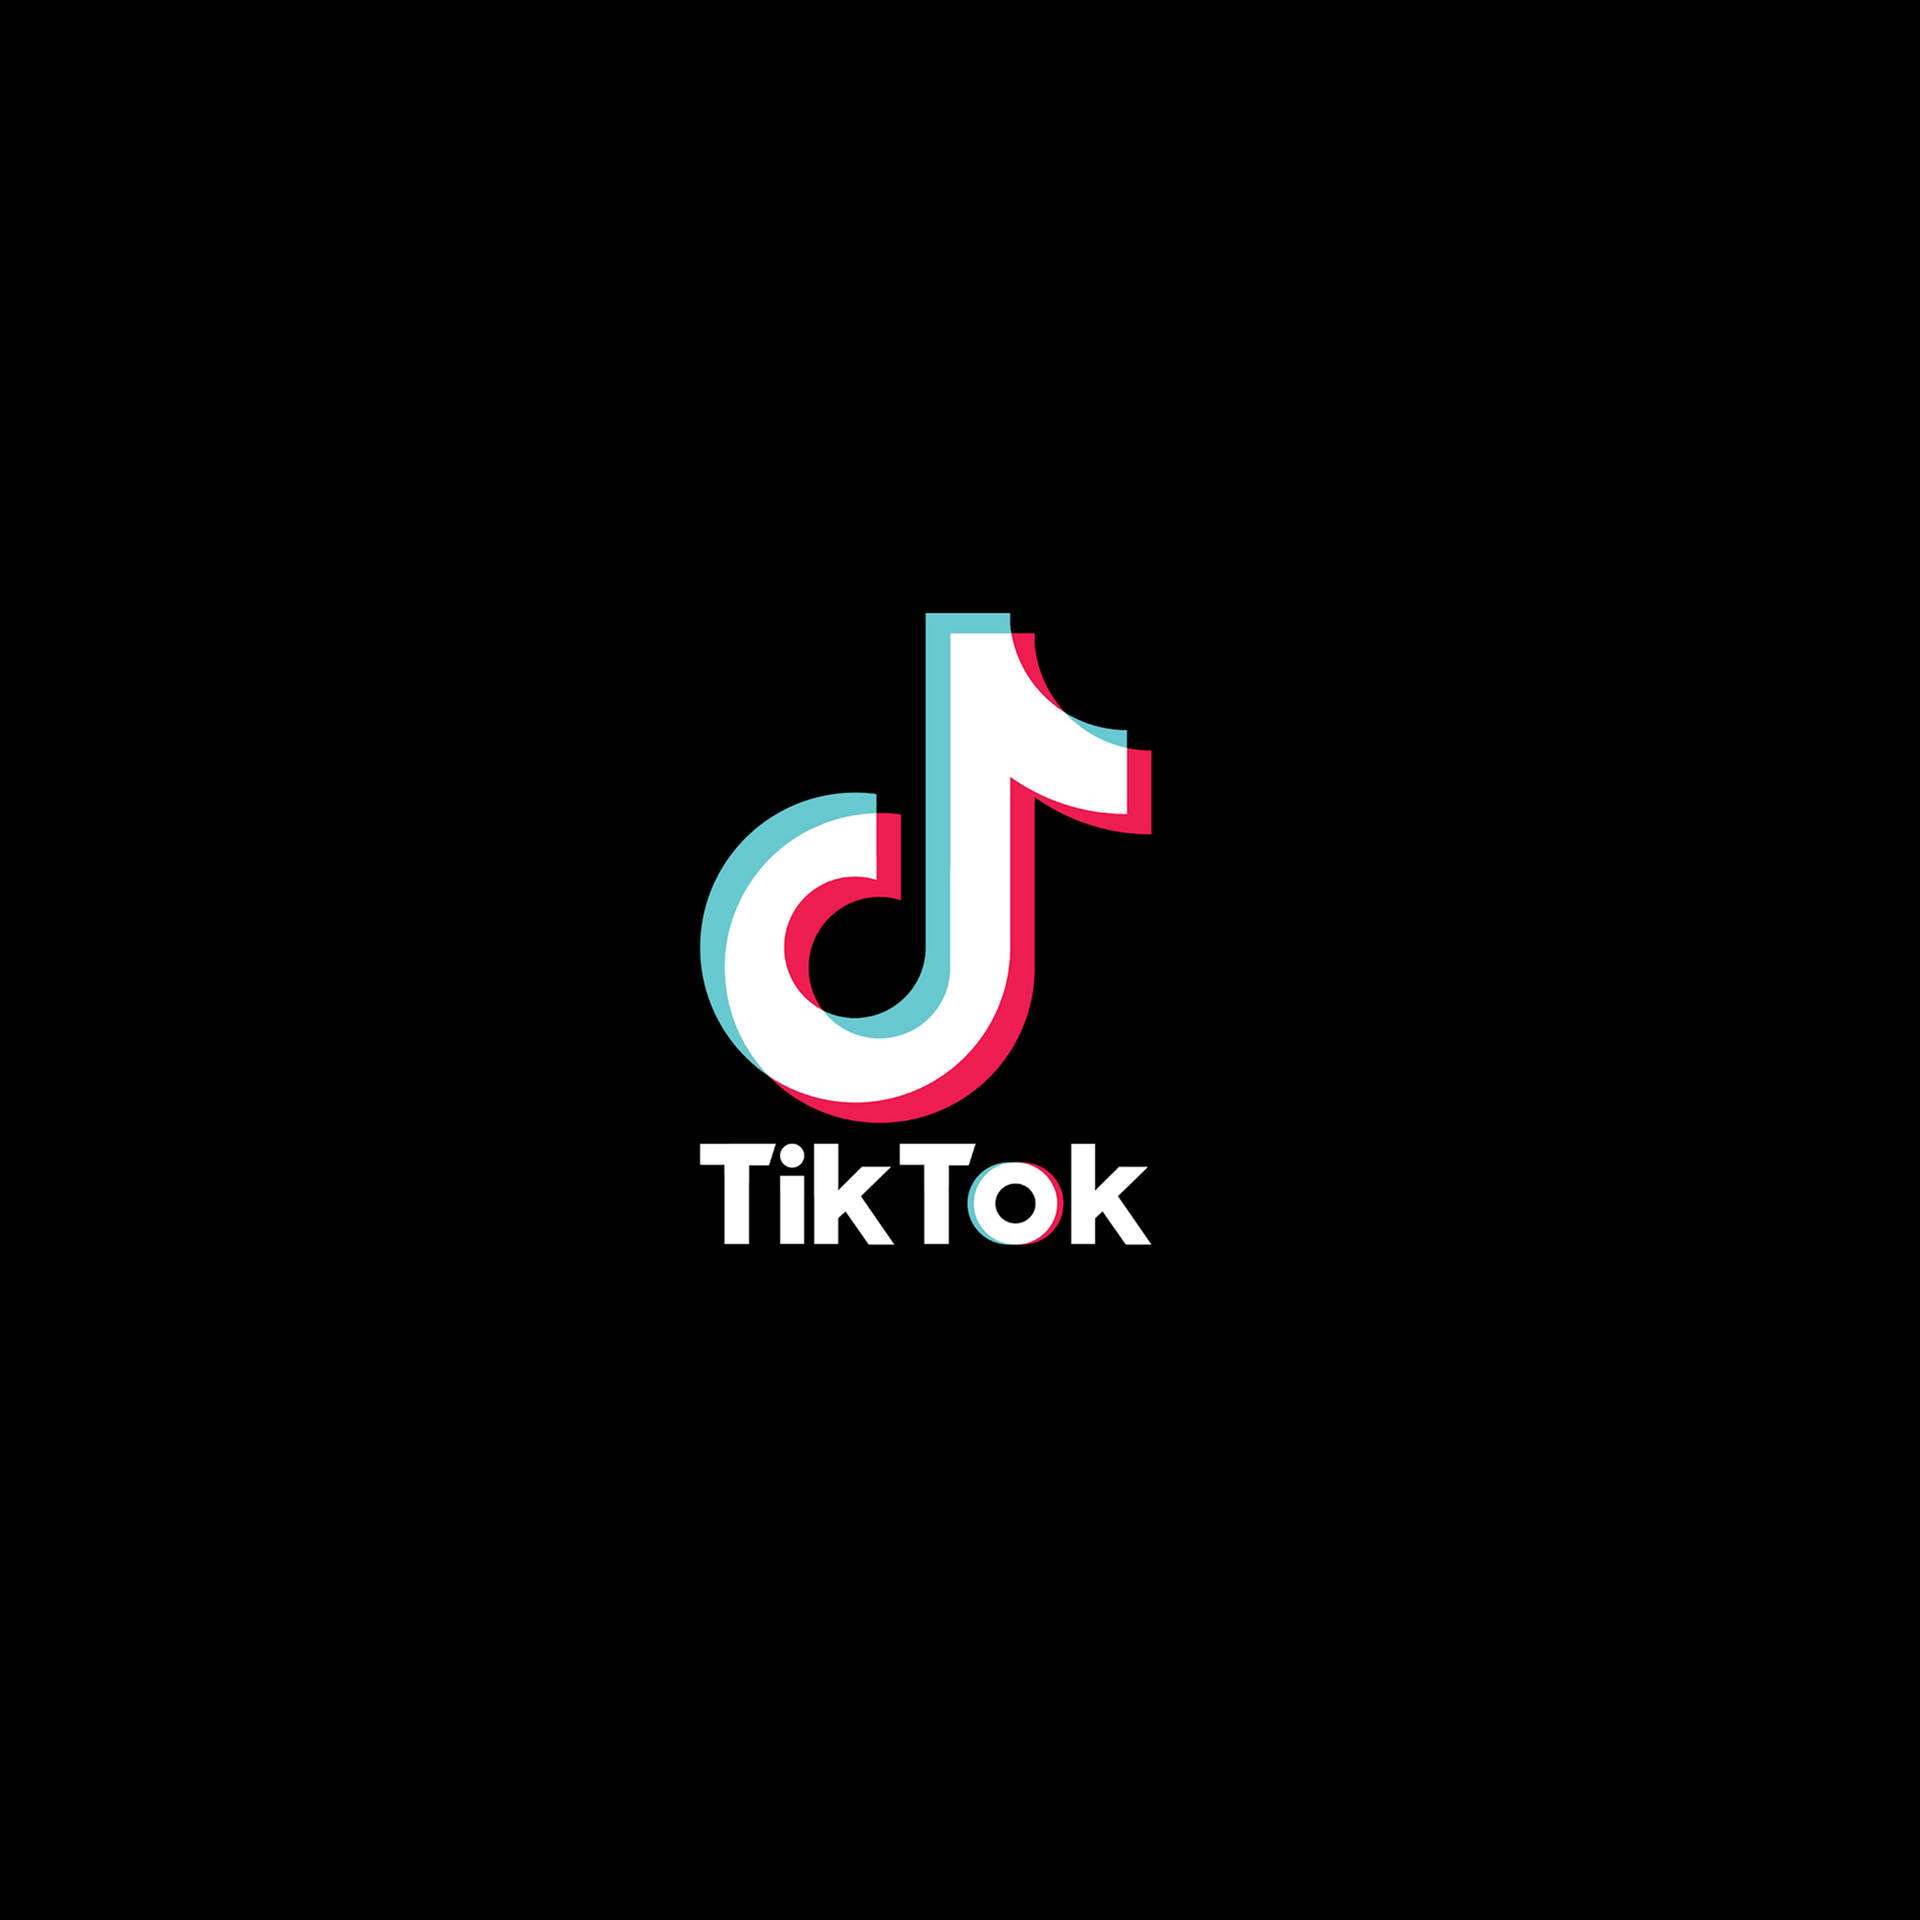 Download TikTok Logo Paint Splash Wallpaper | Wallpapers.com